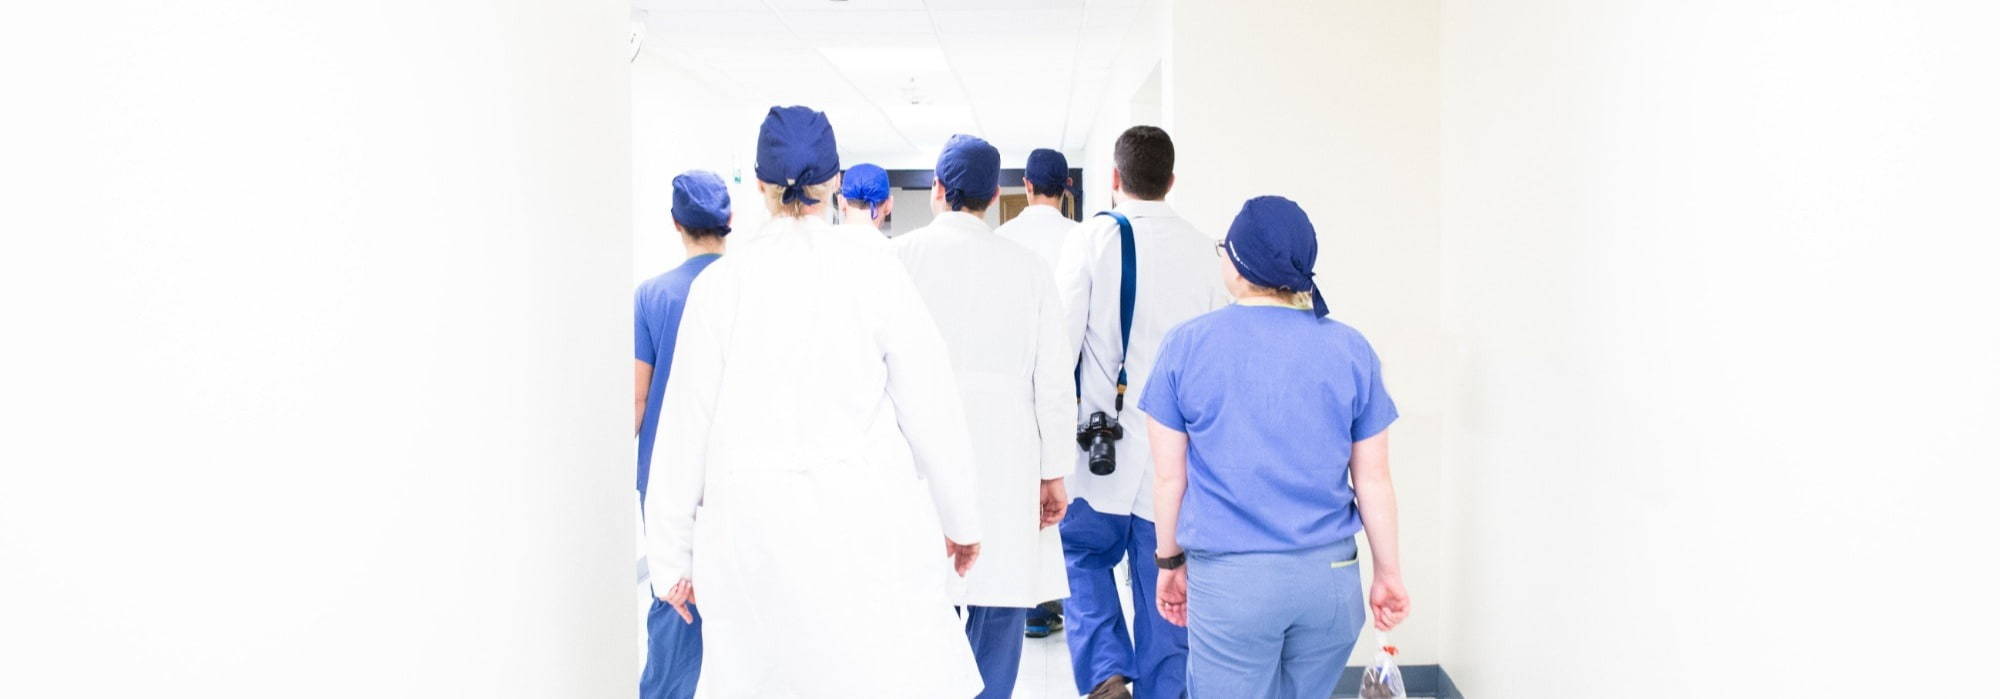 COVID-19 doctors walk down the hallway